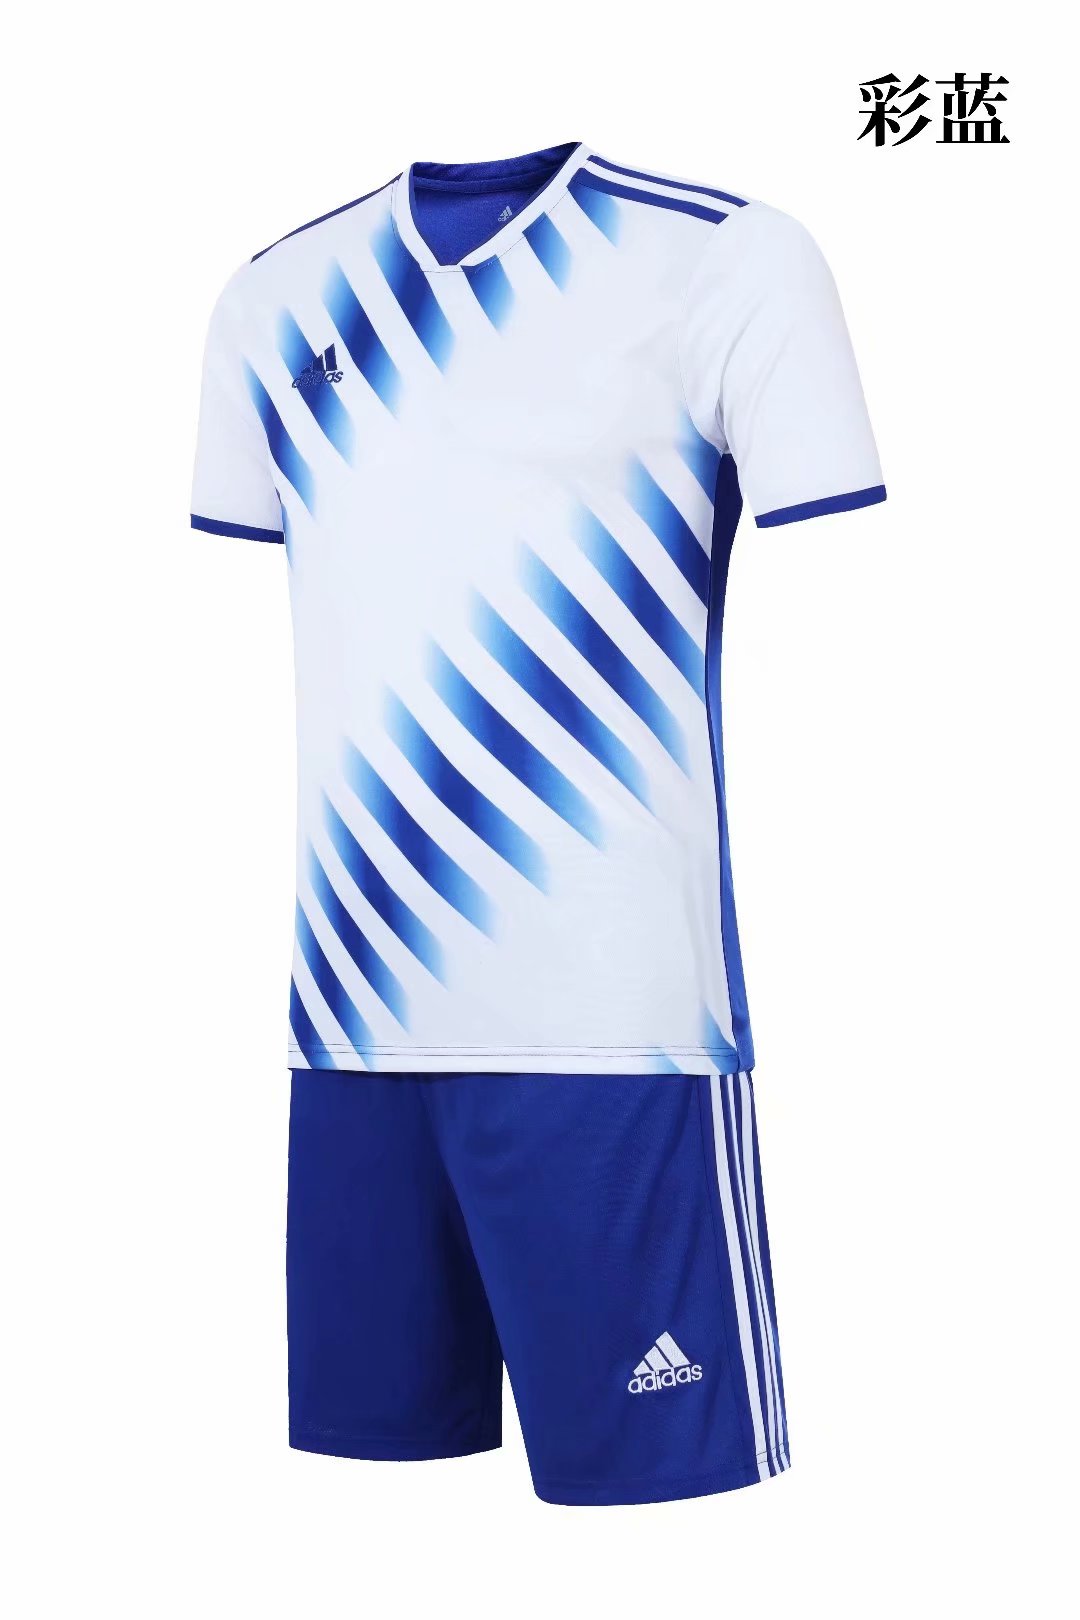 Adidas Soccer Team Uniforms 021